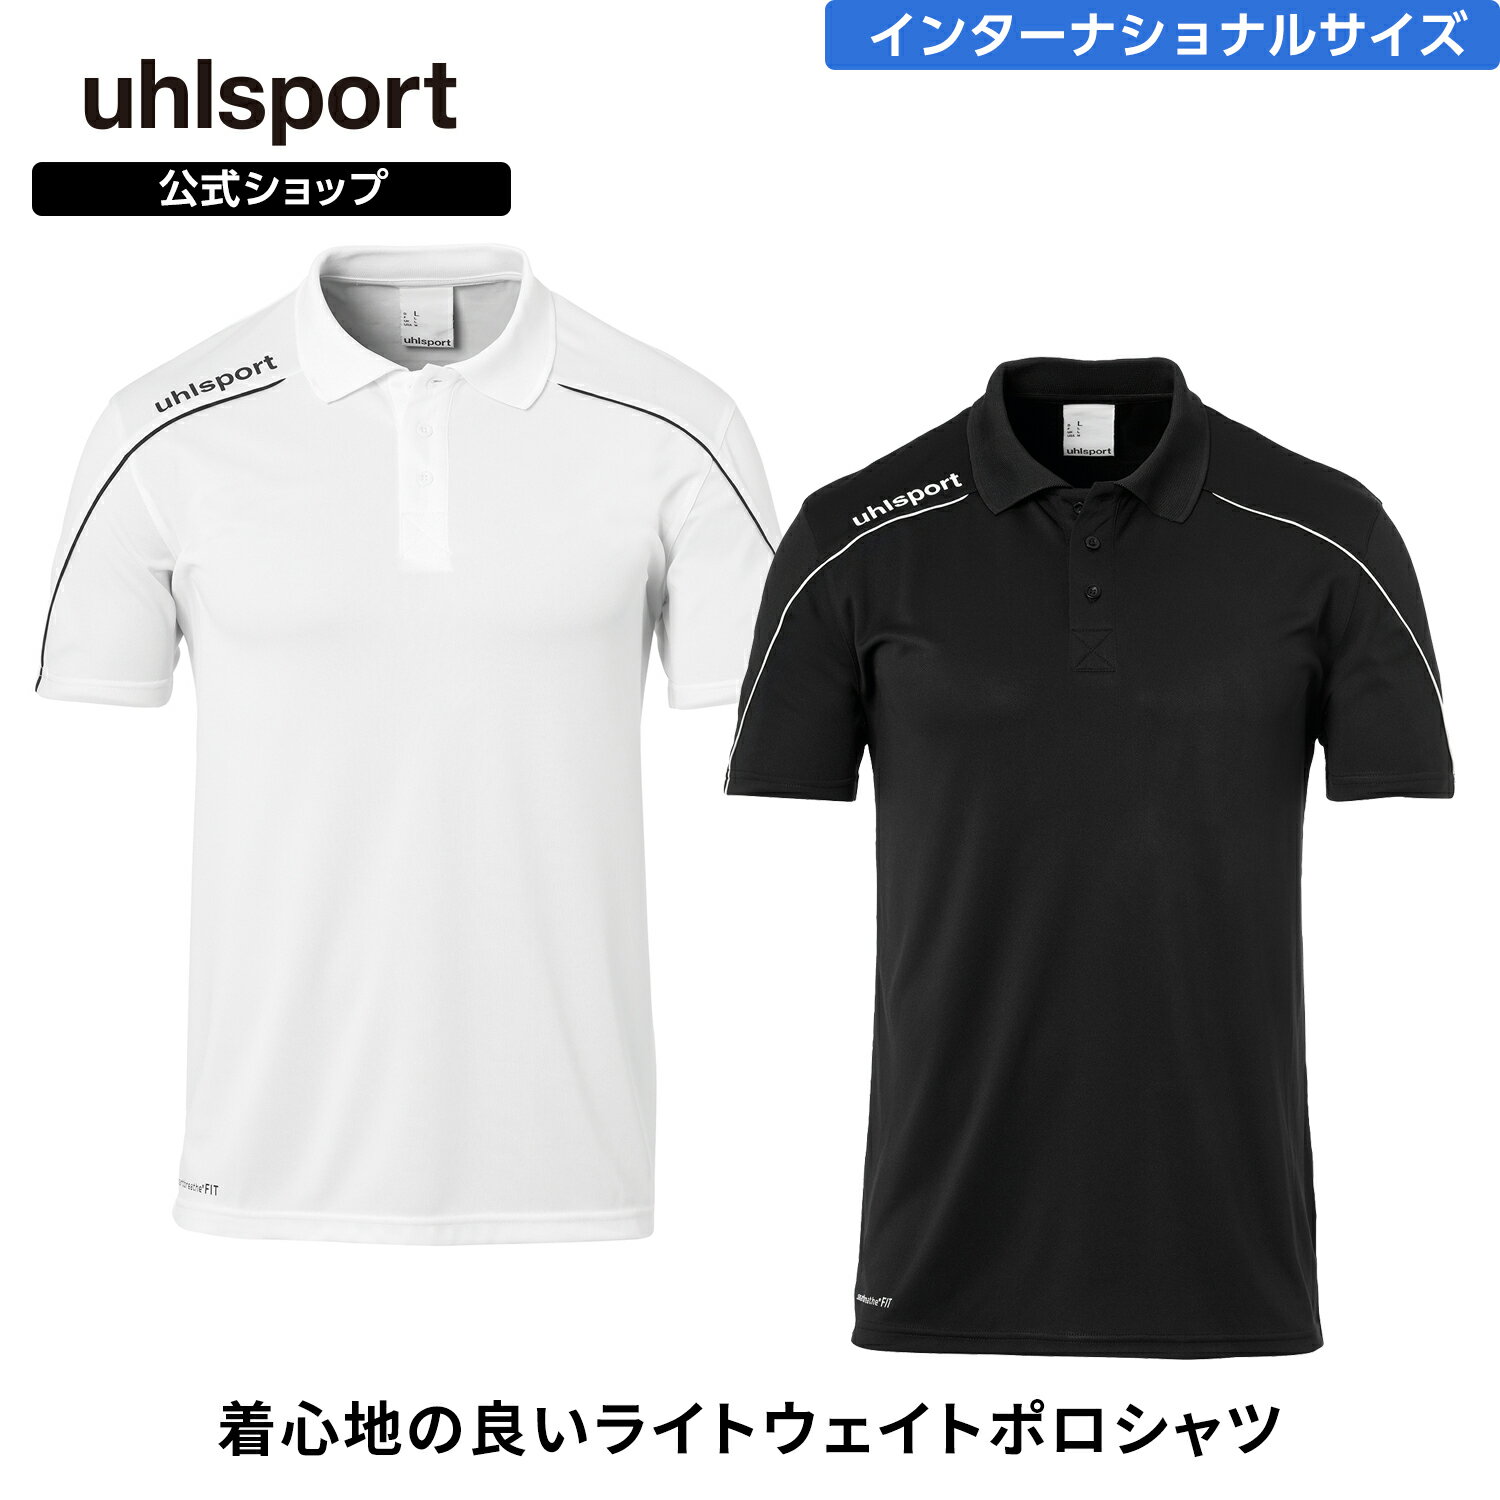  uhlsport ( ウールシュポルト ) | ストリーム 22 ポロシャツ | S ～ XL ( インターナショナルサイズ ) メンズ / ユニセックス 半袖 ポロシャツ オールシーズン ブラック ホワイト 1002204 SALE 50%OFF